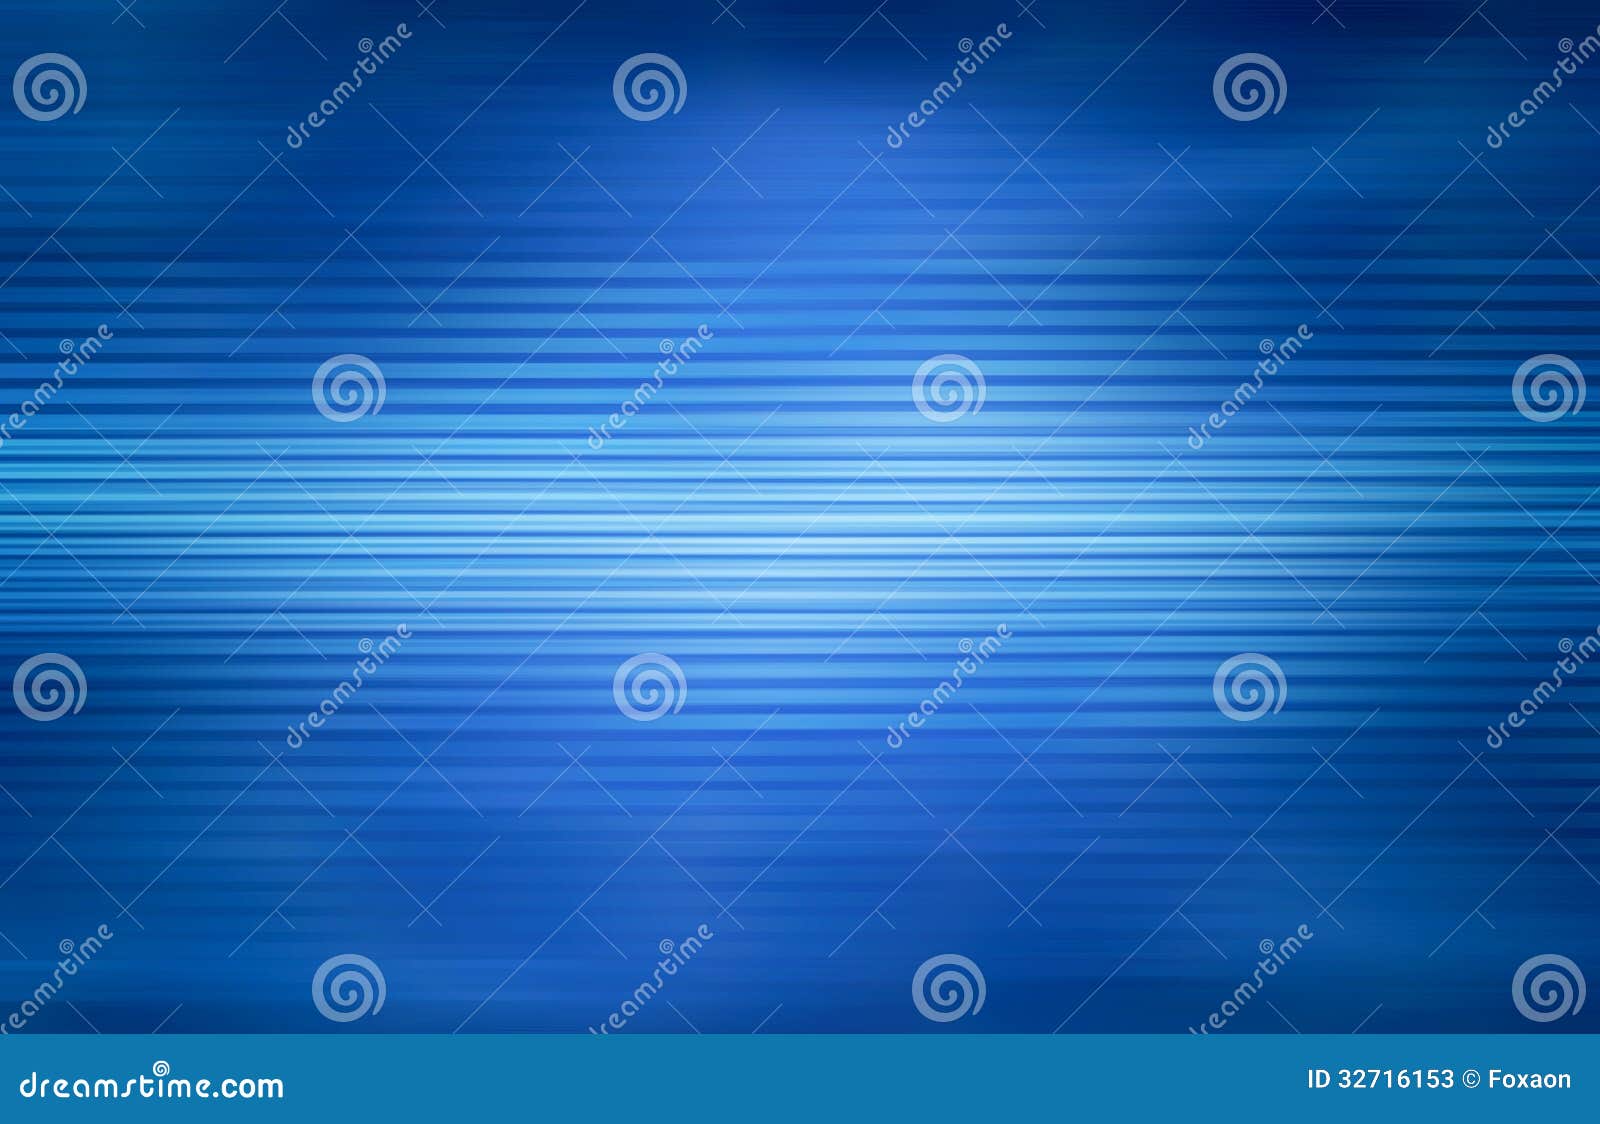 Blue lines background stock image. Image of decoration - 32716153